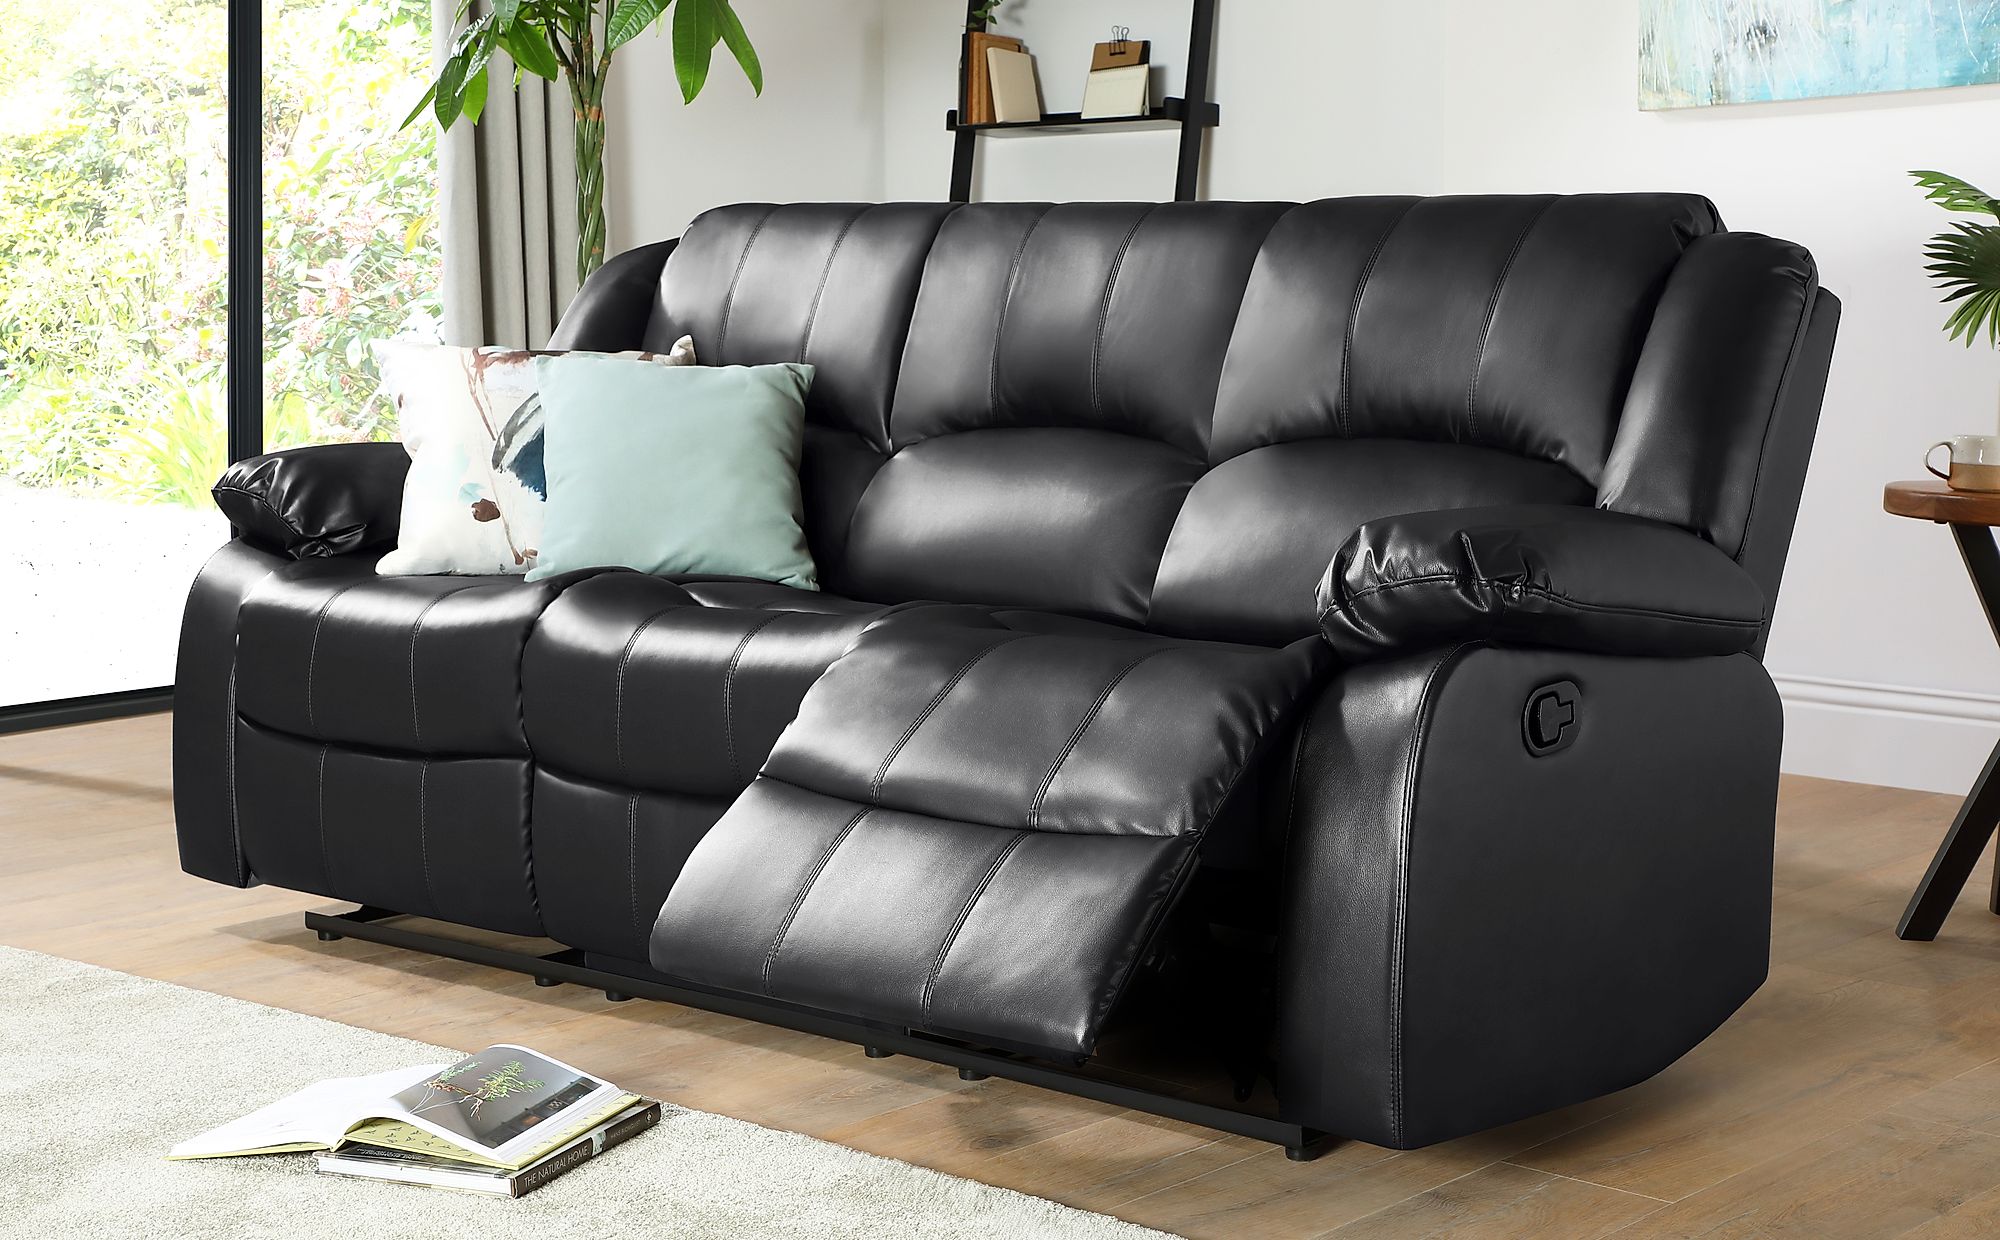 3 seater recliner leather sofa costco